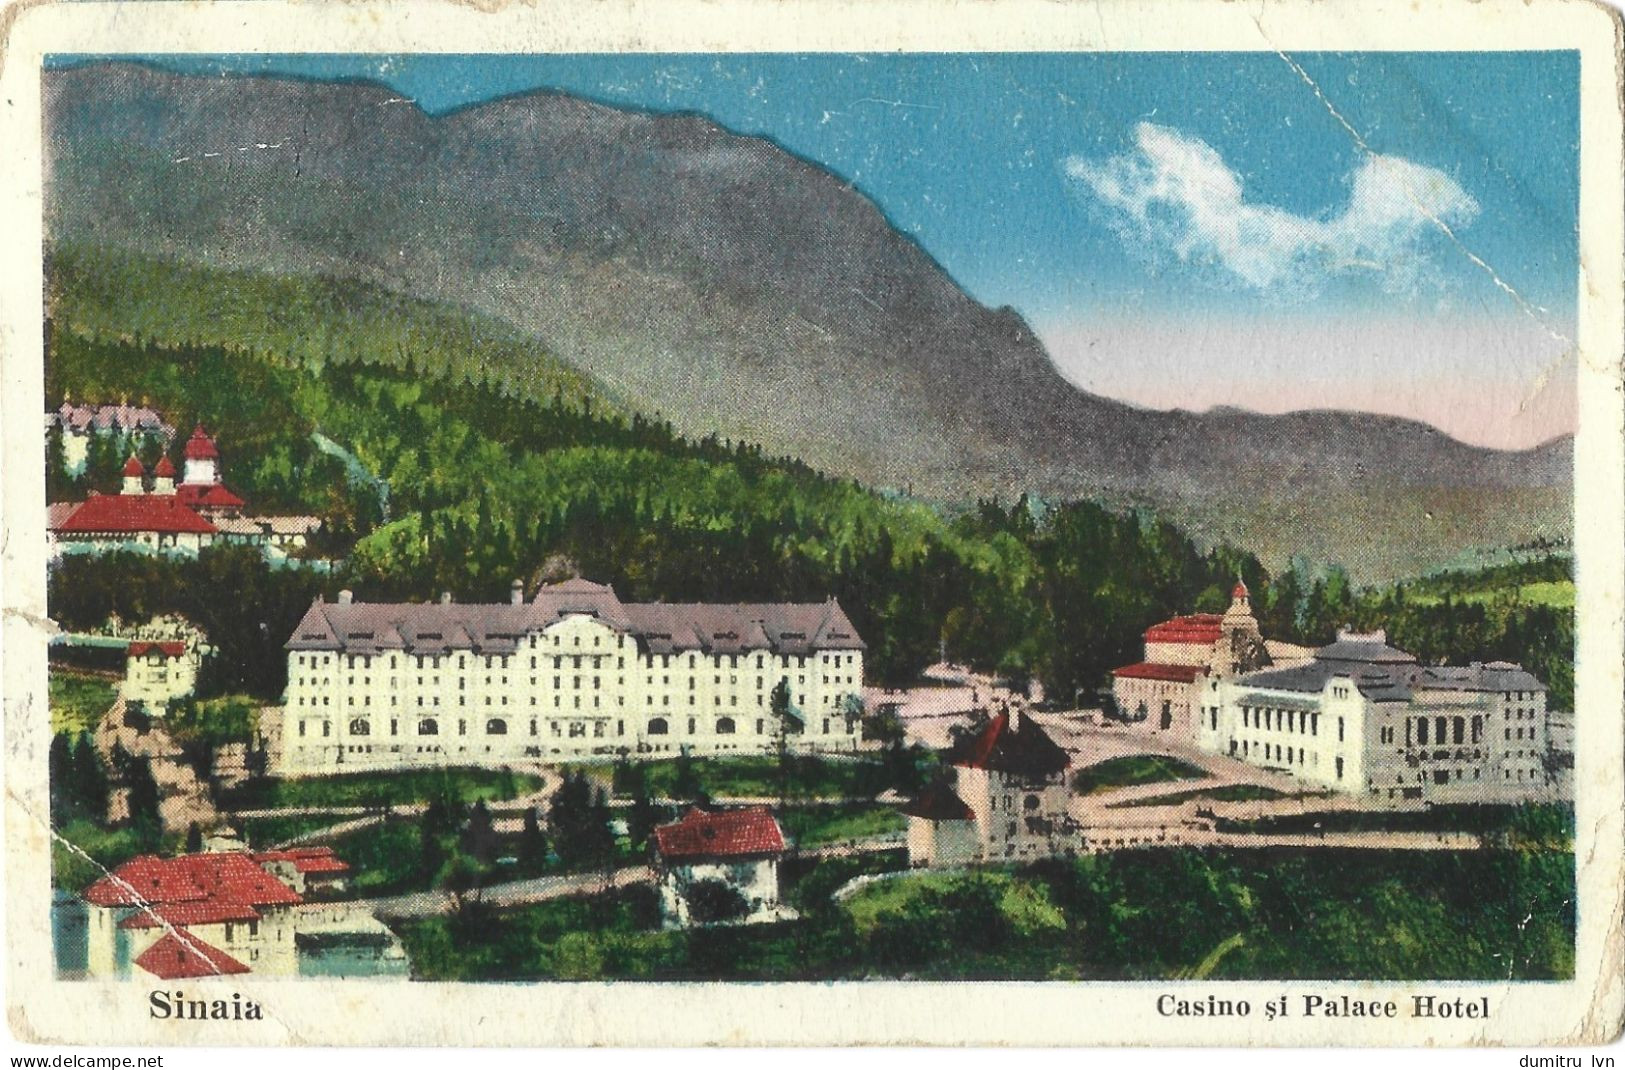 ROMANIA 1935 SINAIA - THE CASINO AND PALACE HOTEL, BUILDINGS, ARCHITECTURE, MOUNTAIN LANDSCAPE - Rumänien